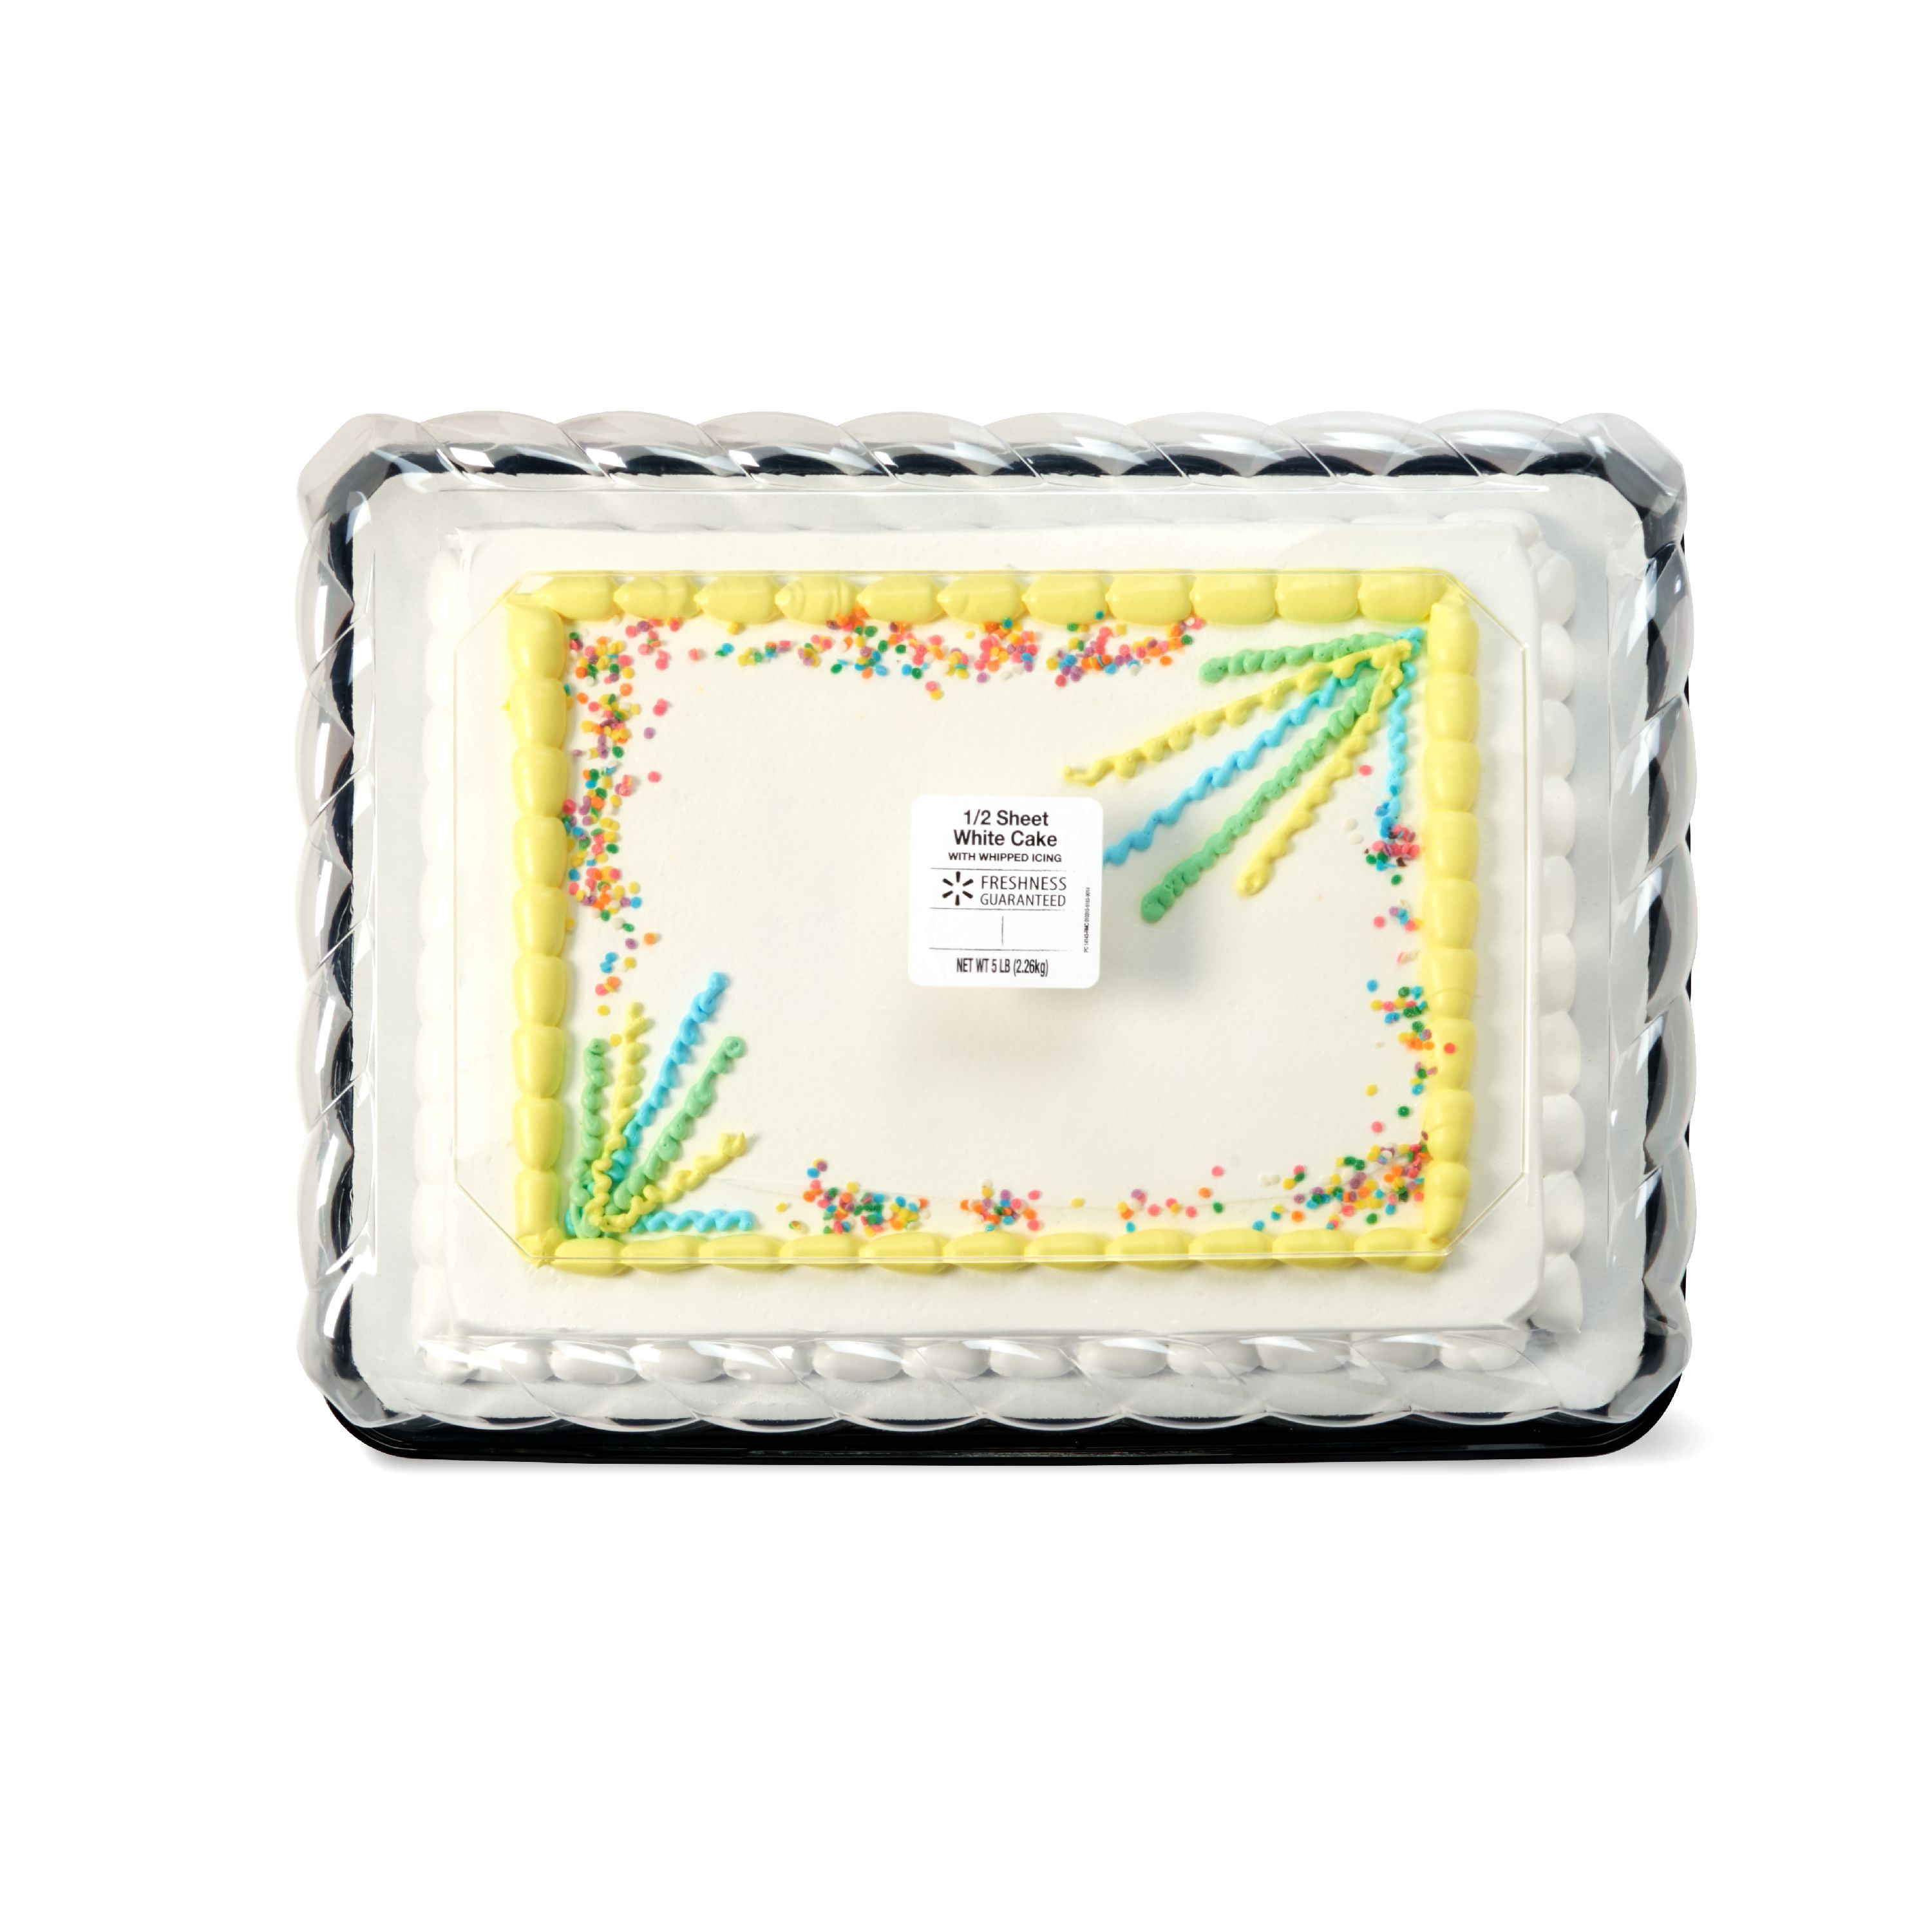 Freshness Guaranteed White Cake With Whipped Icing 1 2 Sheet Cake 80 Oz Walmart Com Walmart Com